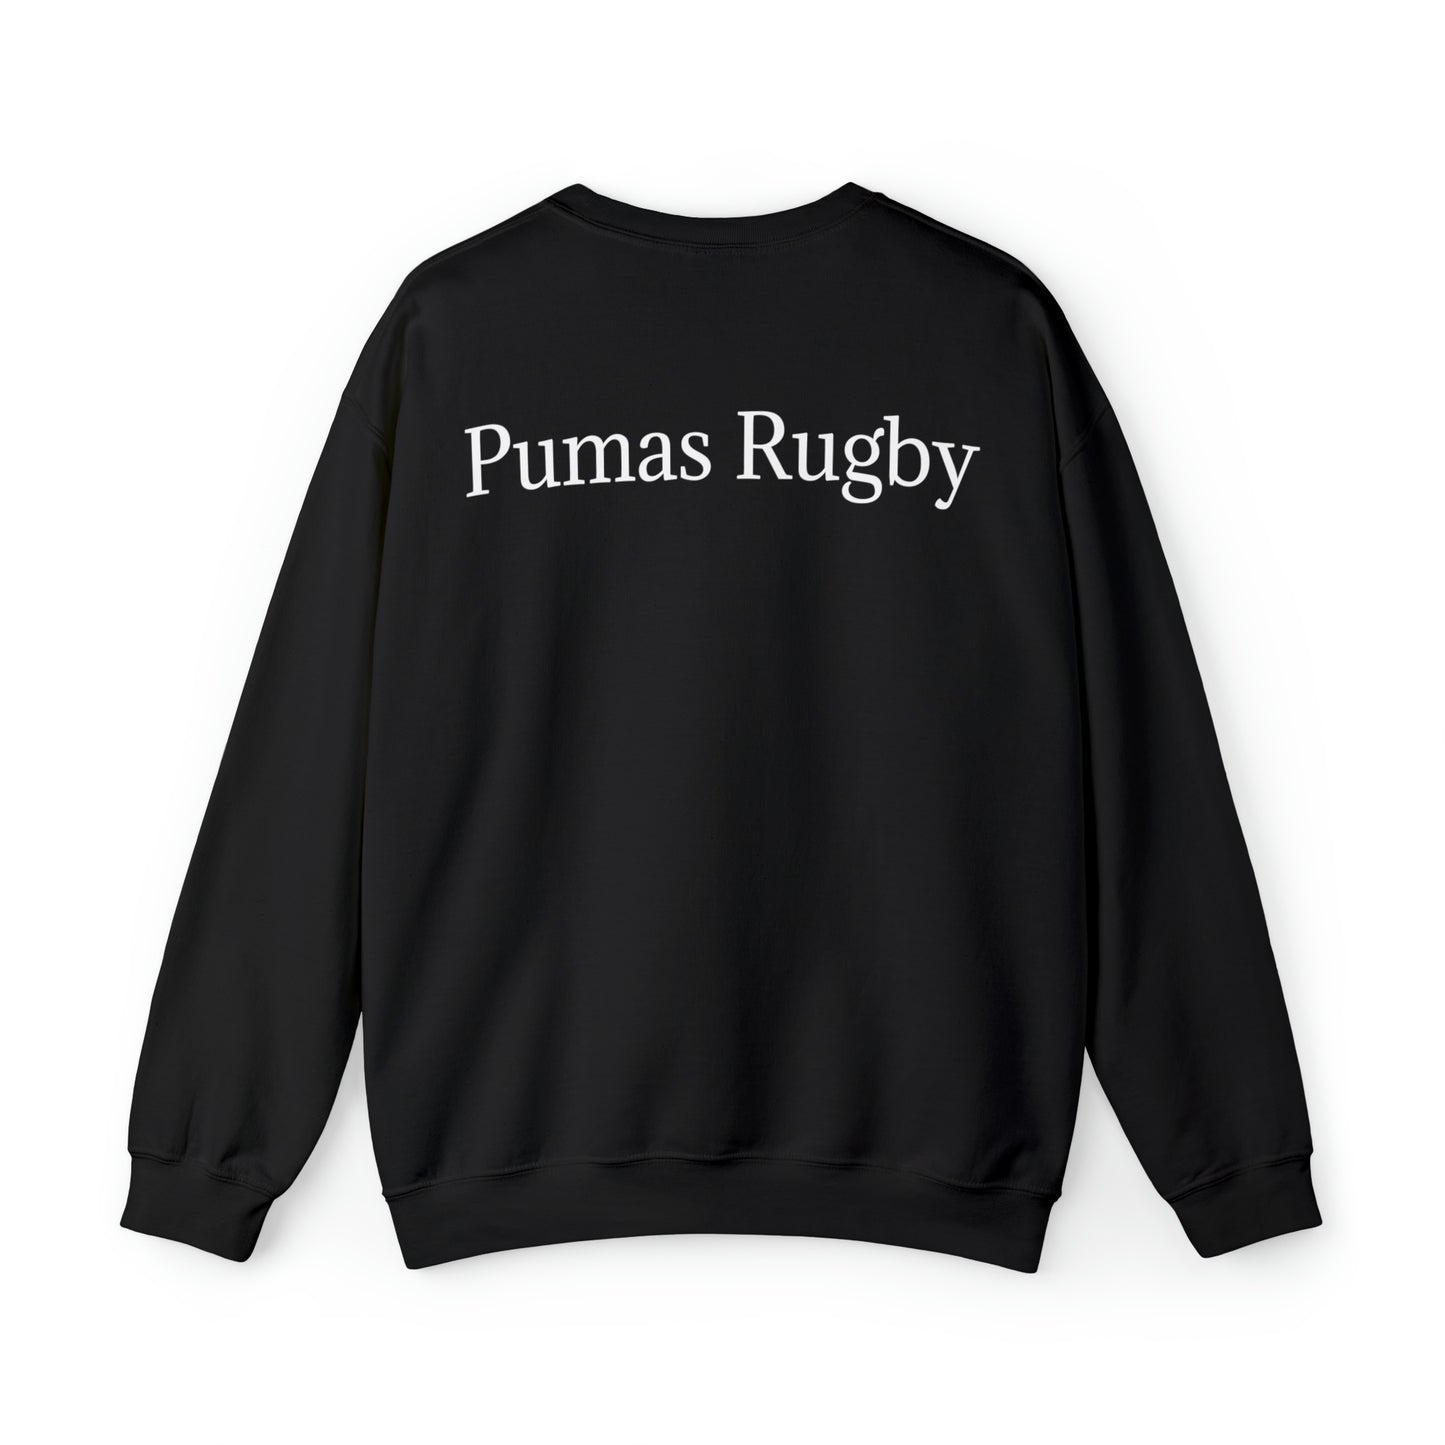 Pumas with RWC - black sweatshirt